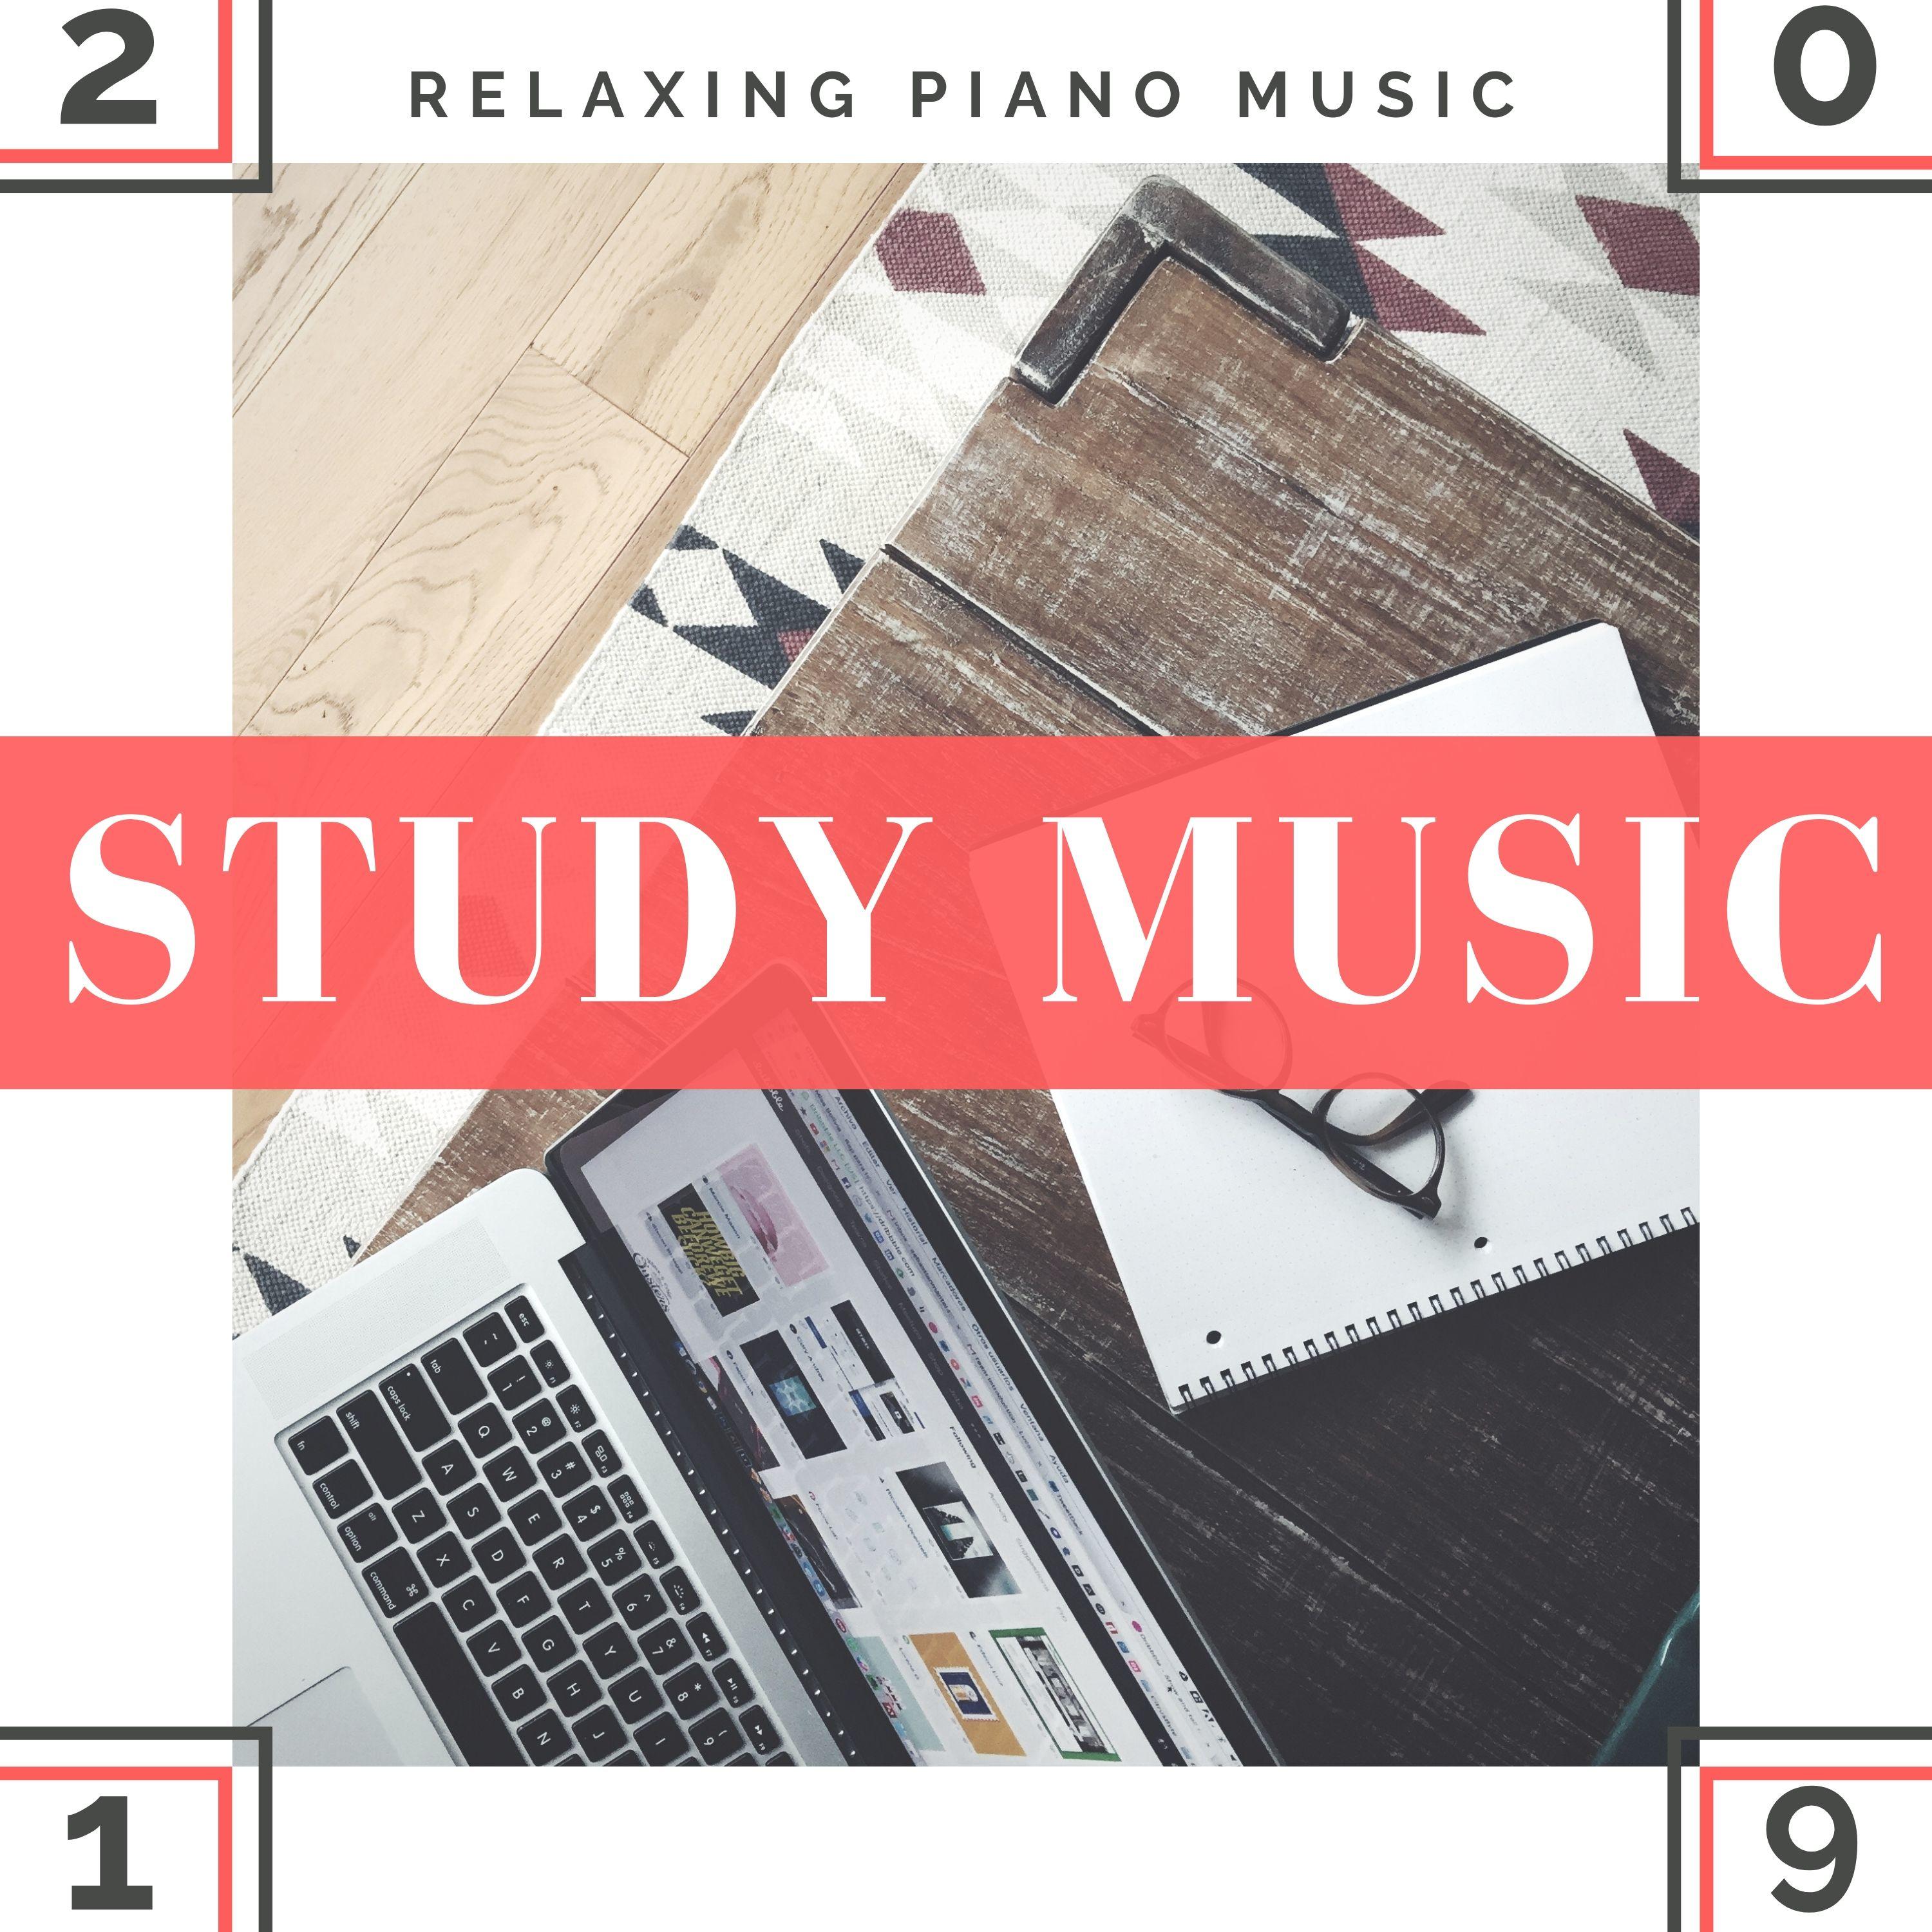 Study Music 2019 - Relaxing Piano Music to Make you Smarter